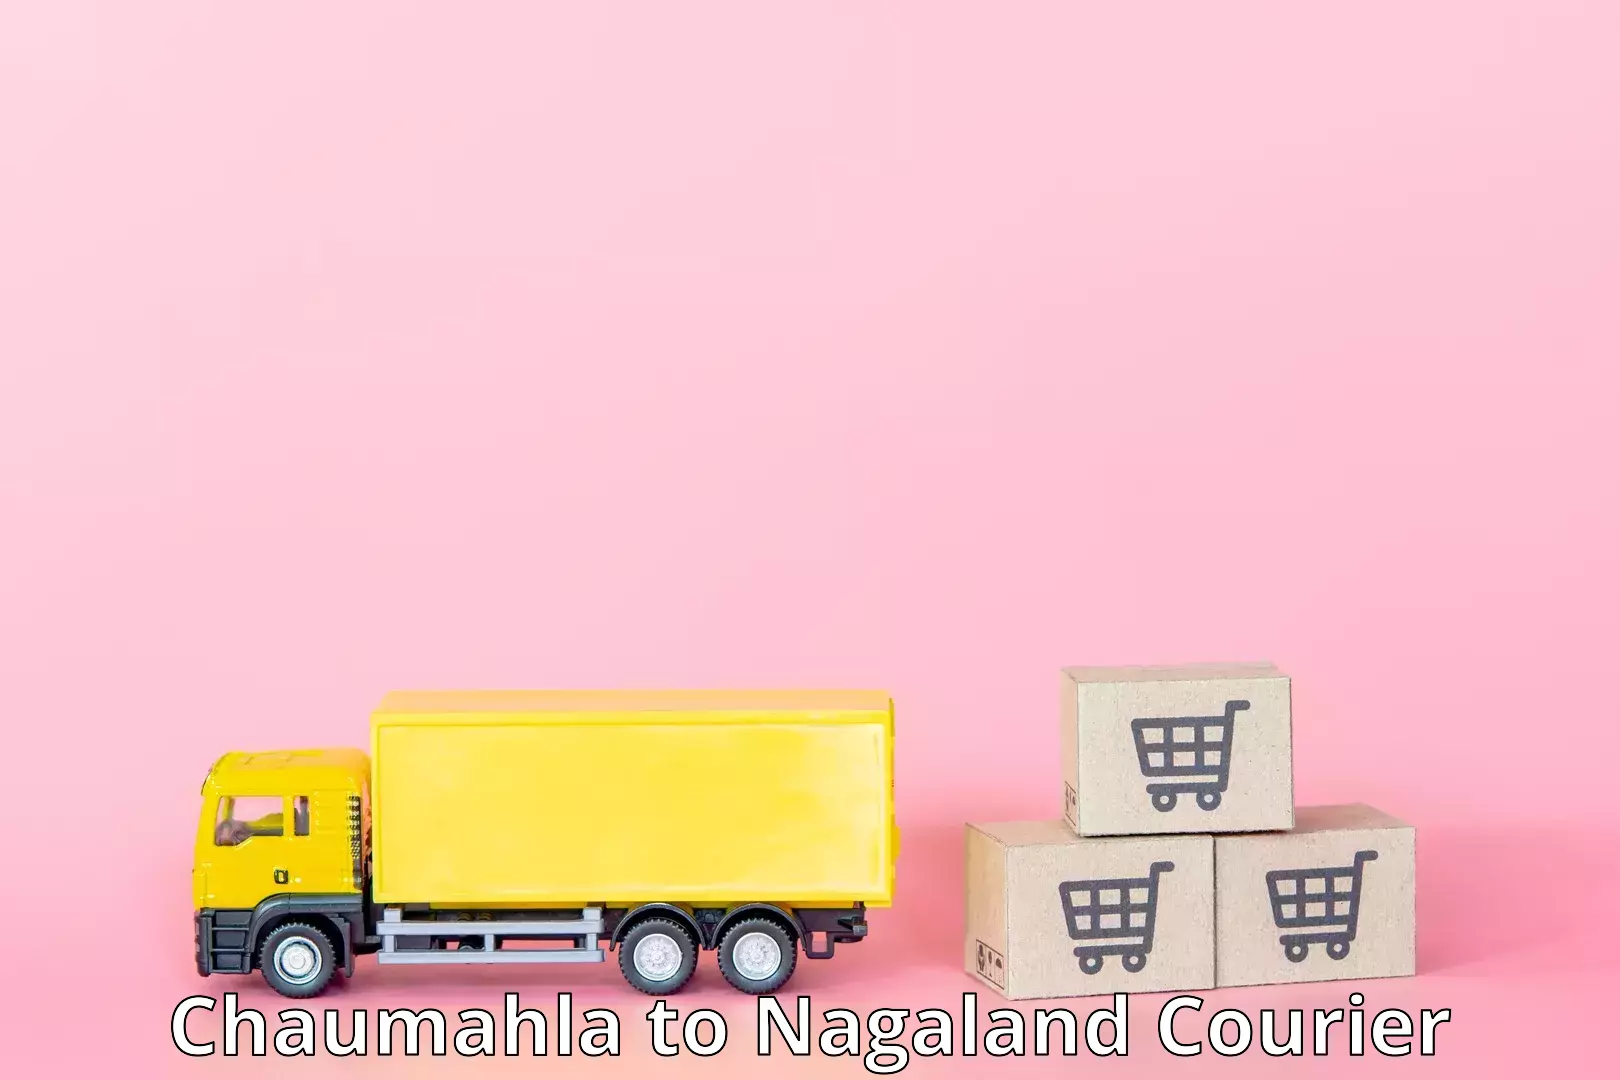 Global shipping networks Chaumahla to Nagaland